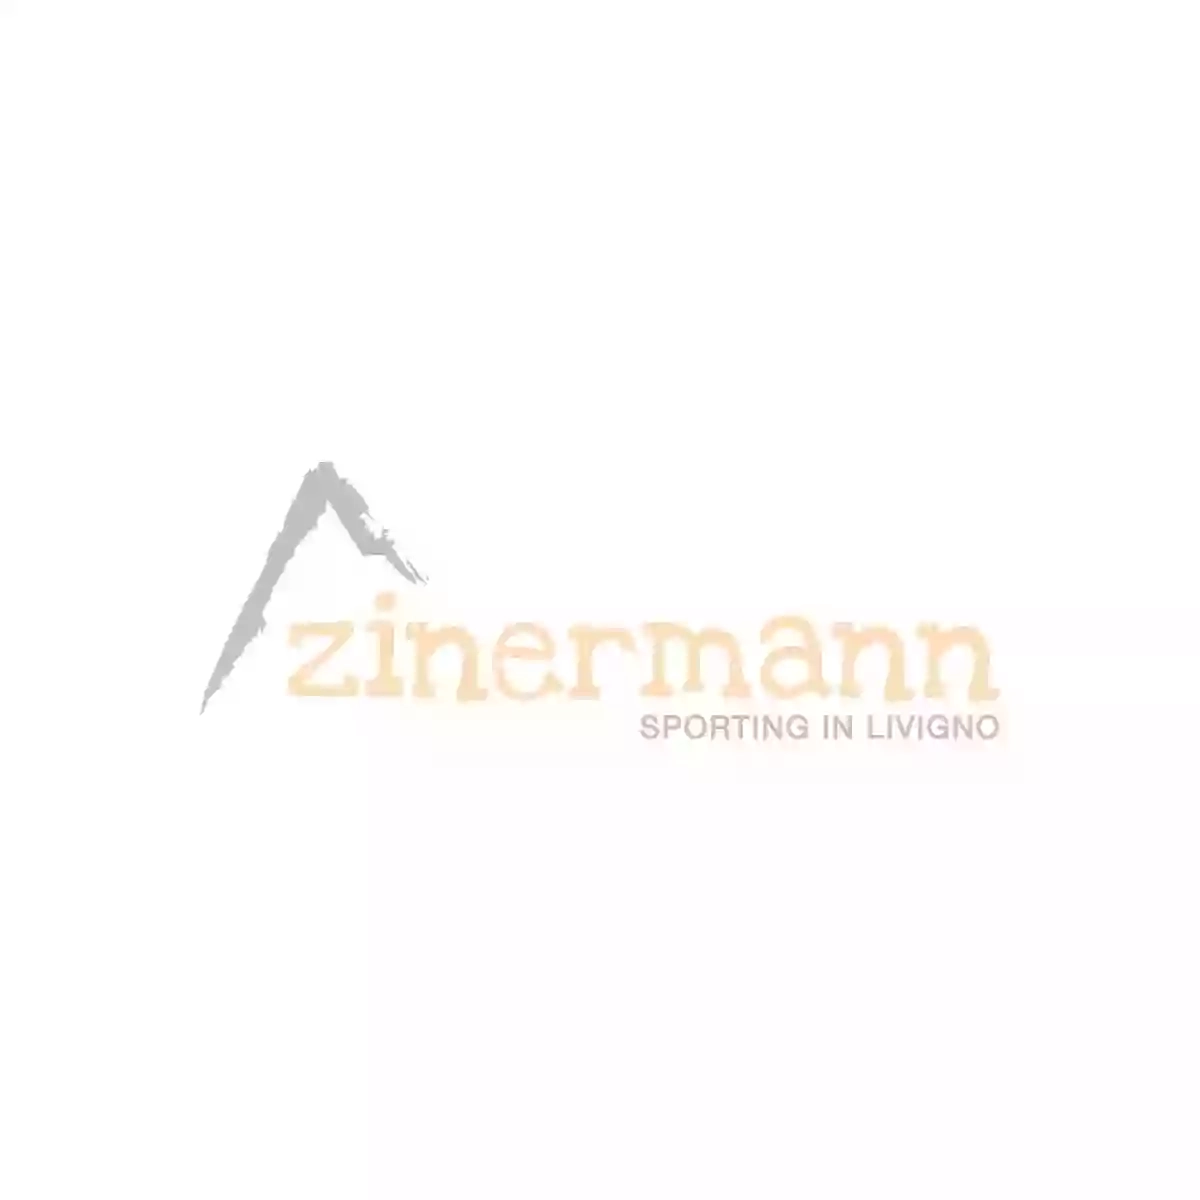 Zinermann Sporting